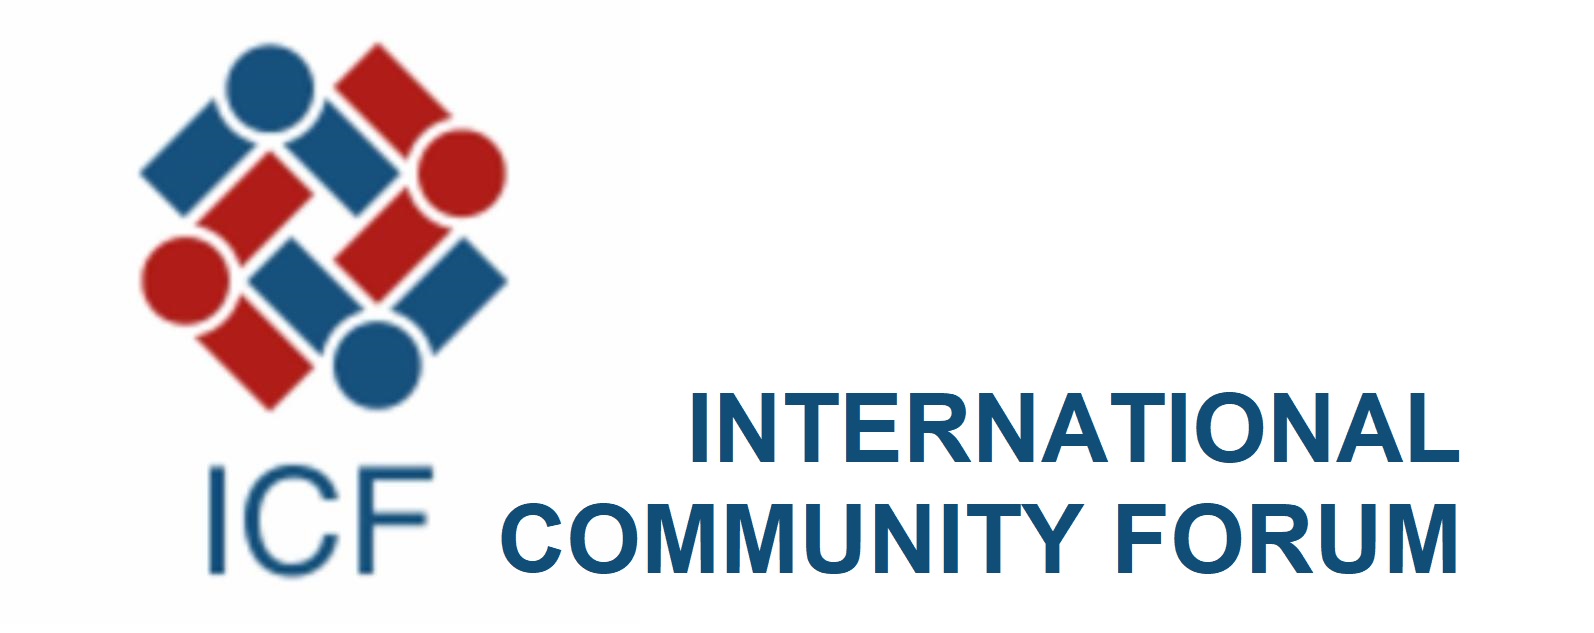 Information Community Forum (ICF)